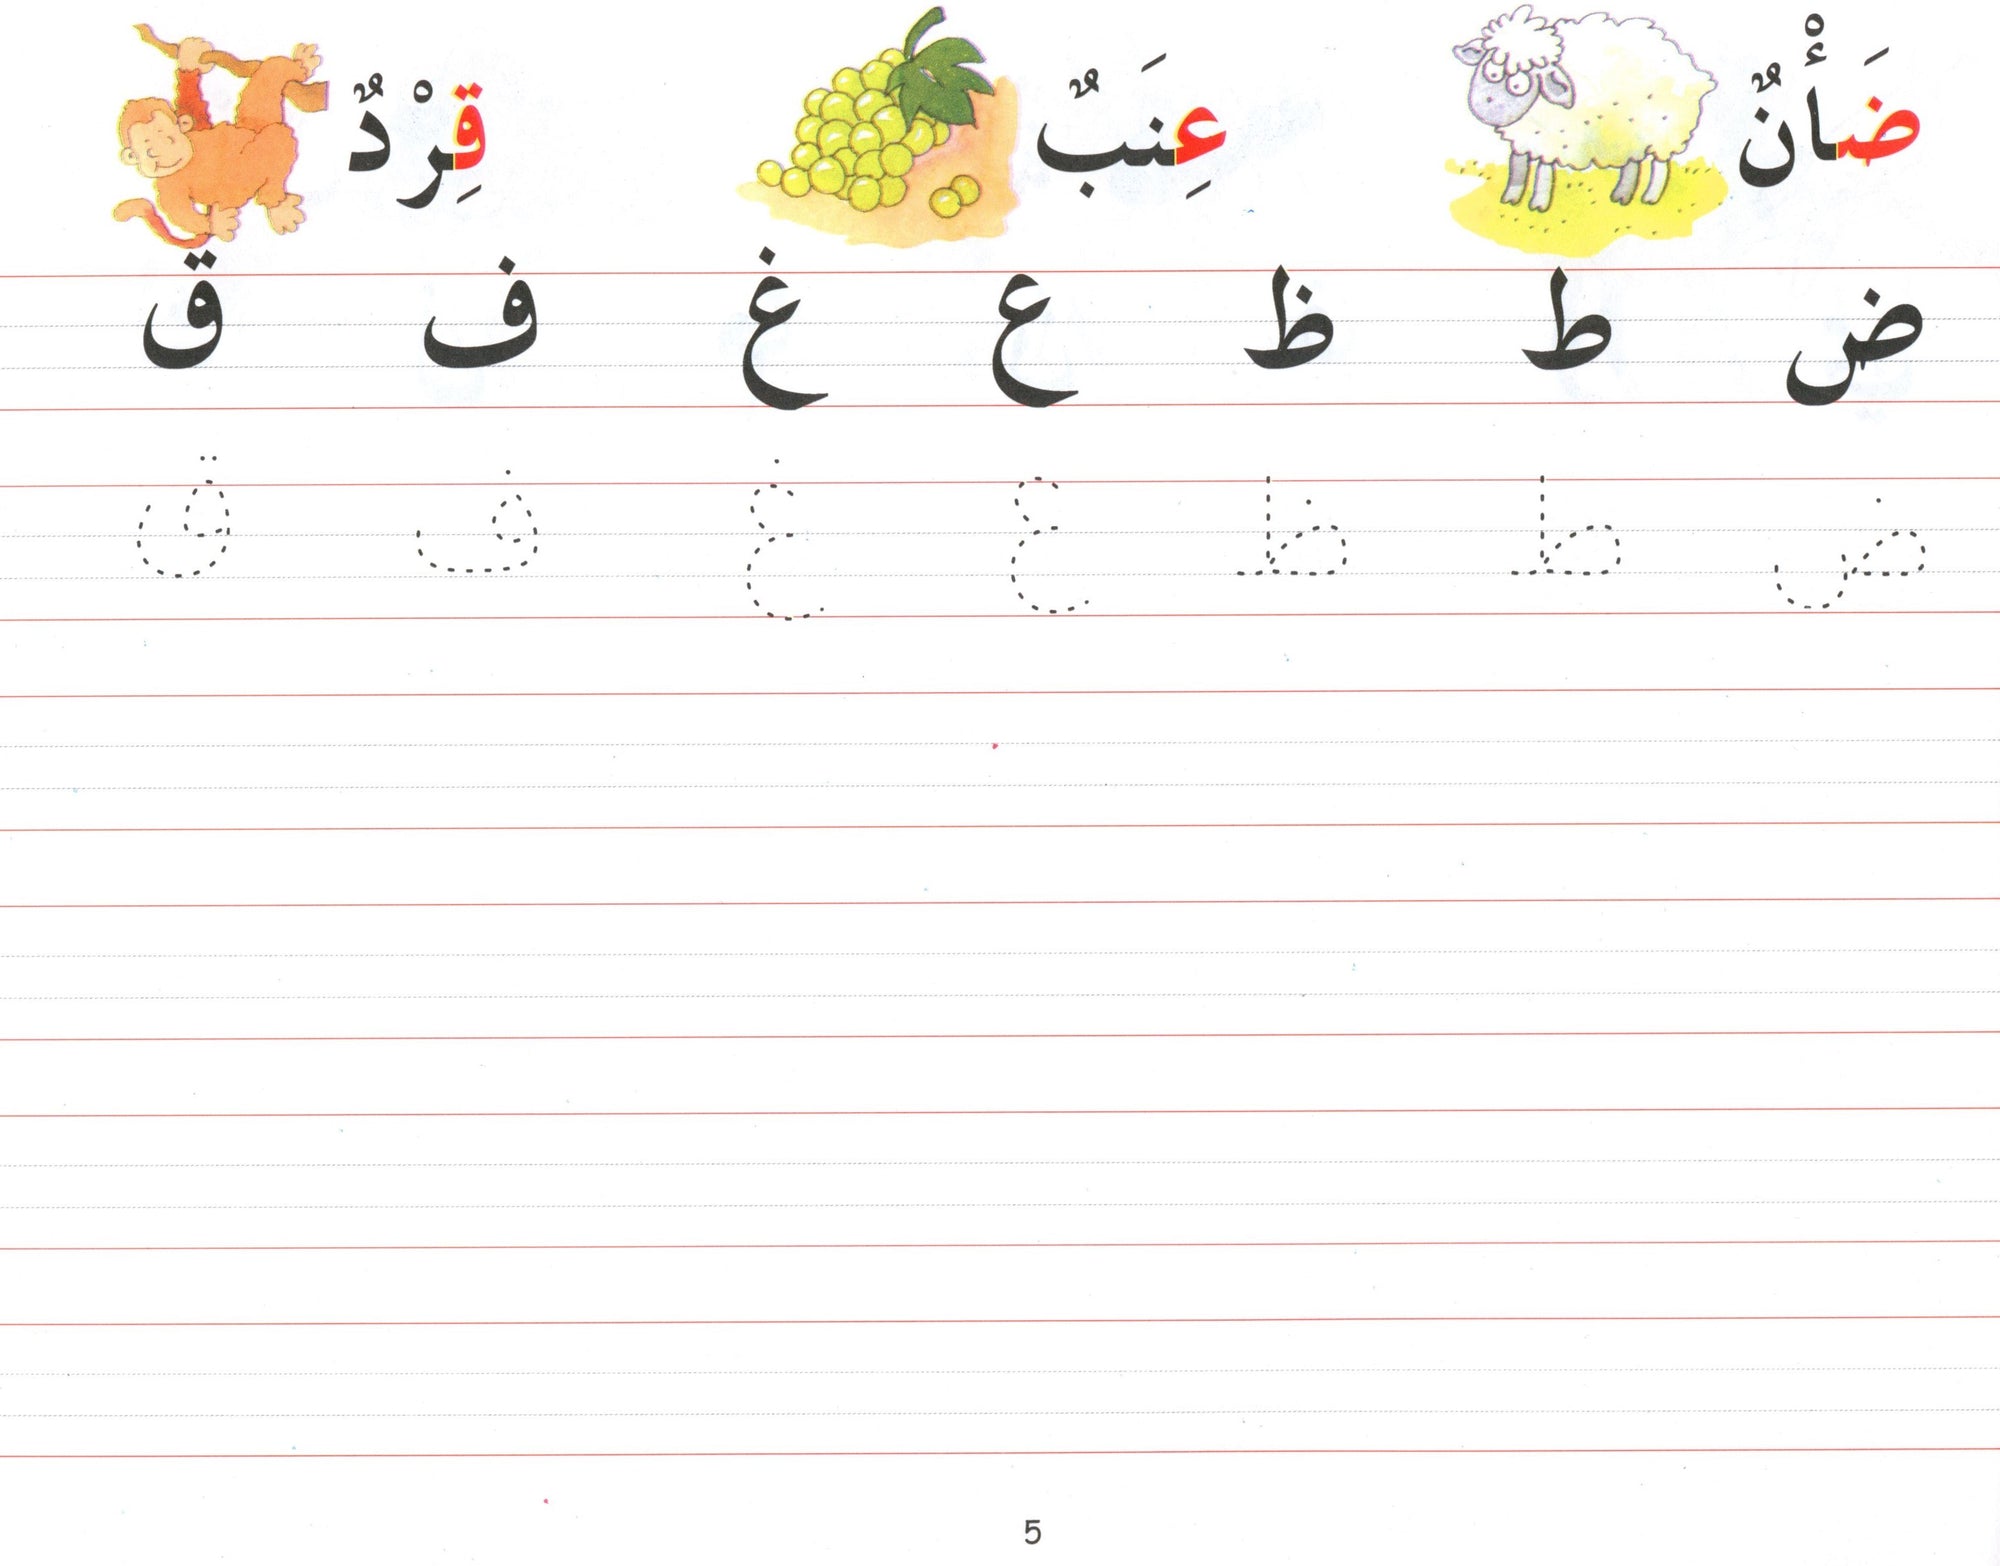 Goodword Arabic Writing Book 2